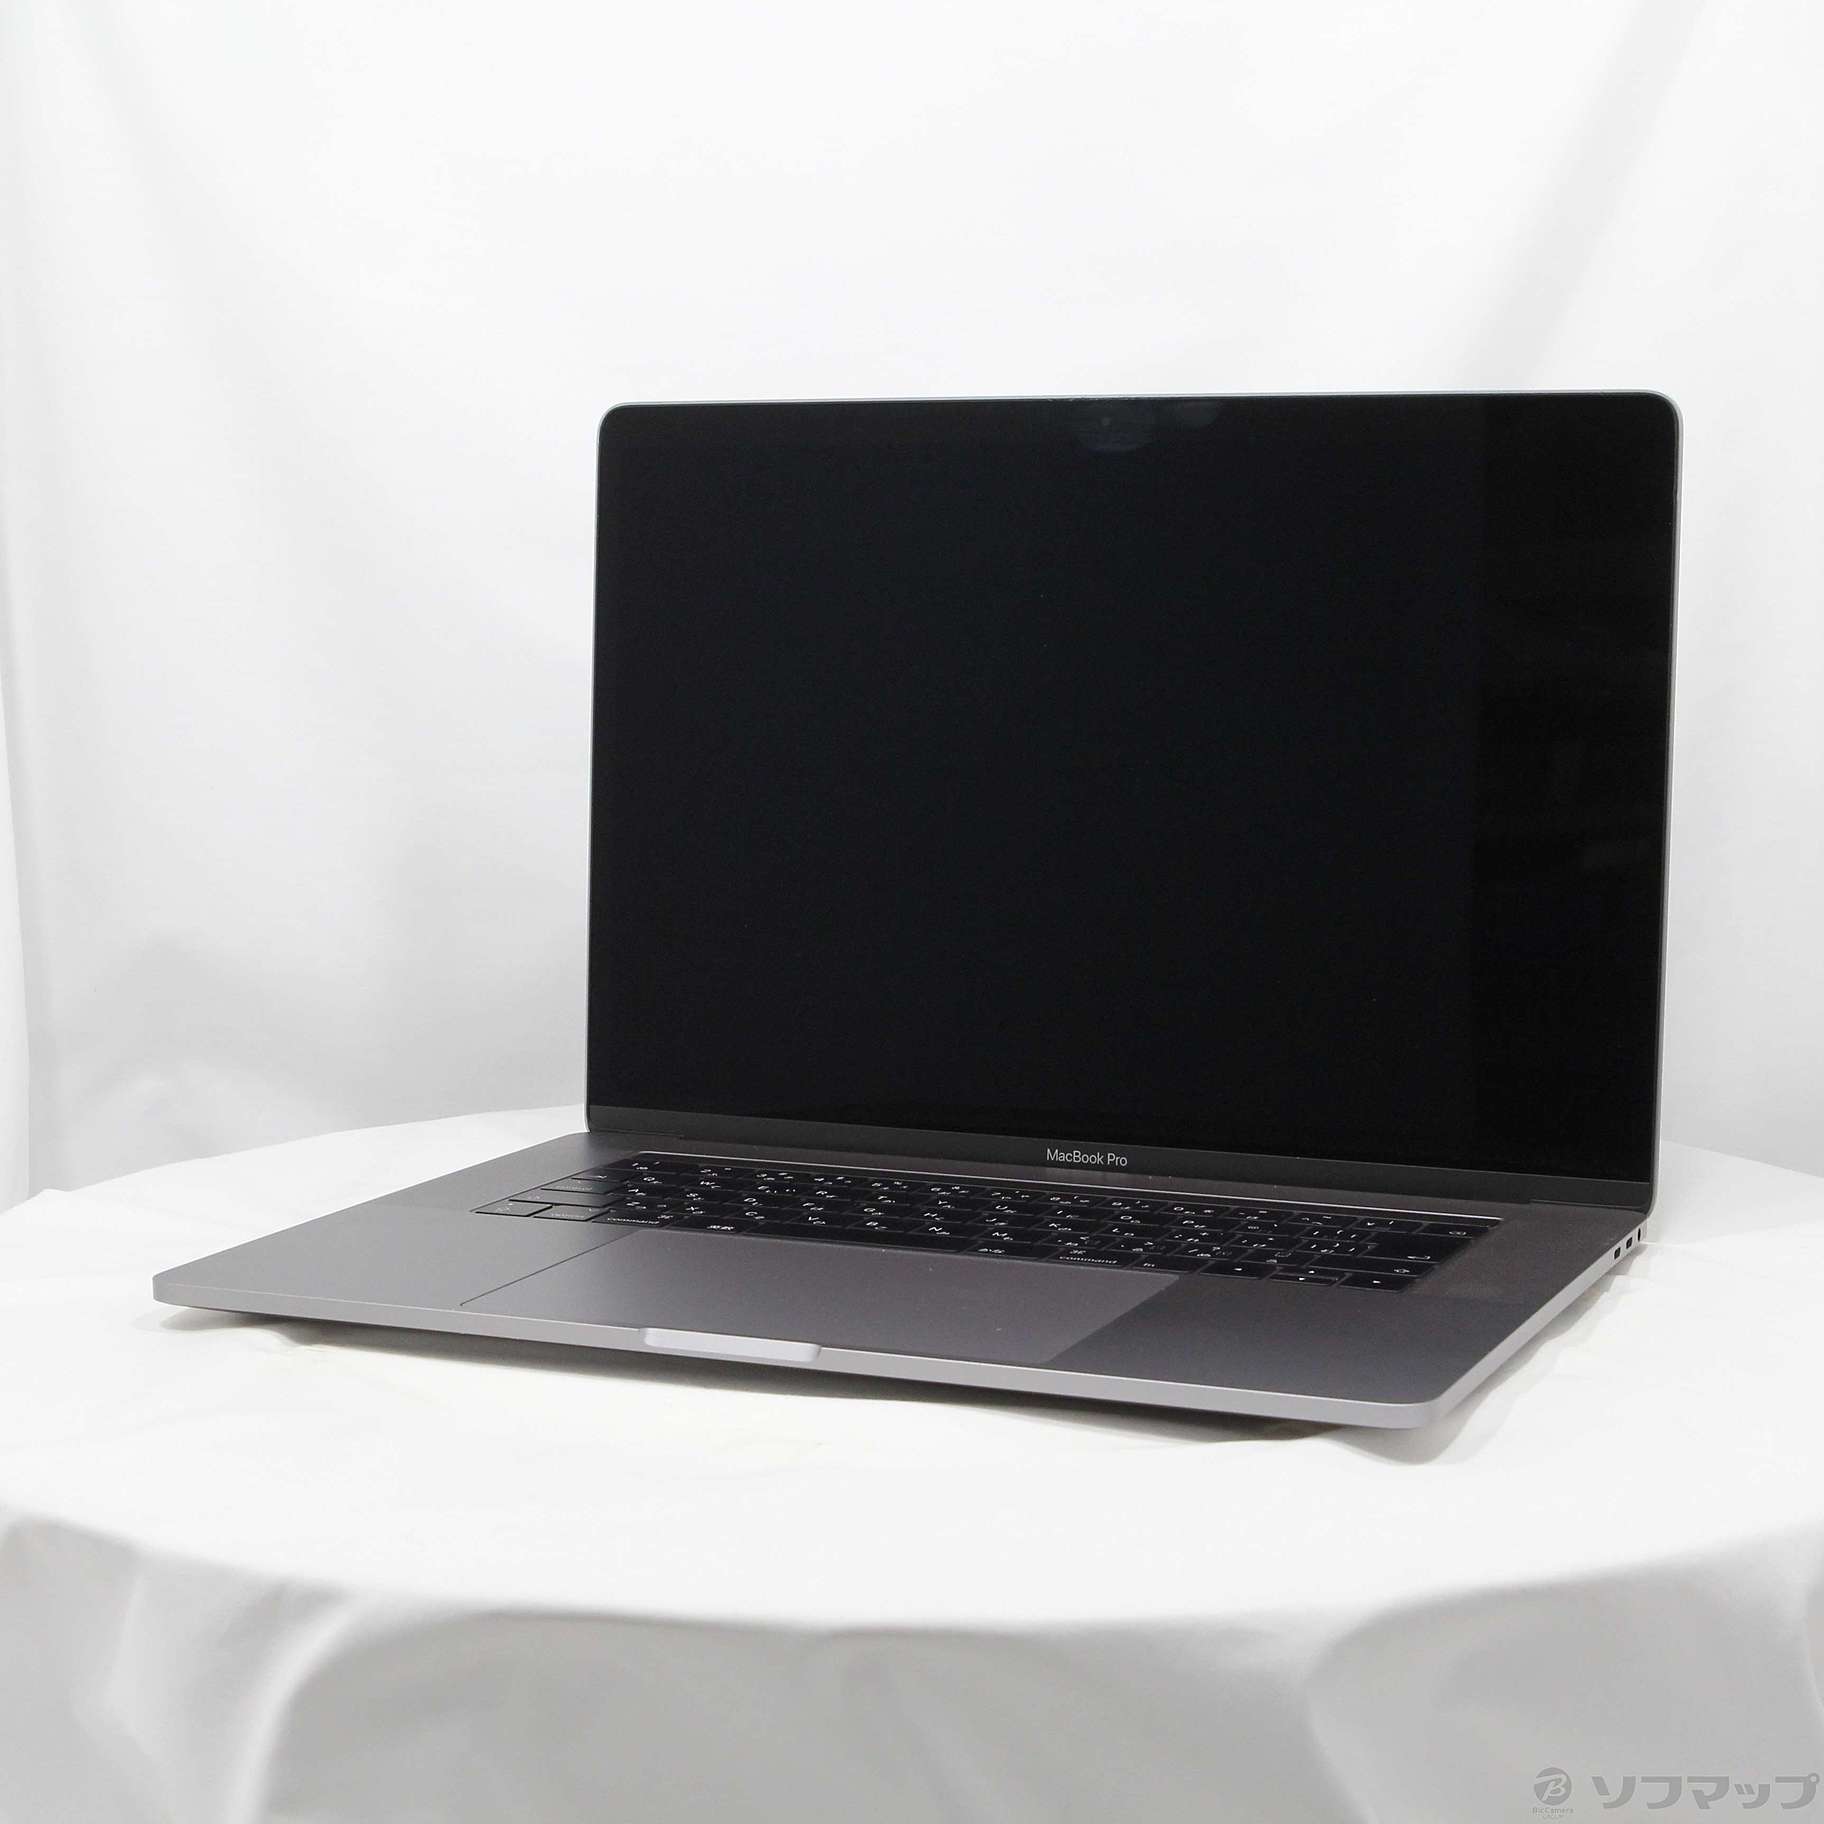 中古品(难有的)]MacBook Pro 15-inch Mid 2017 MPTT2J/A Core_i7 2.9